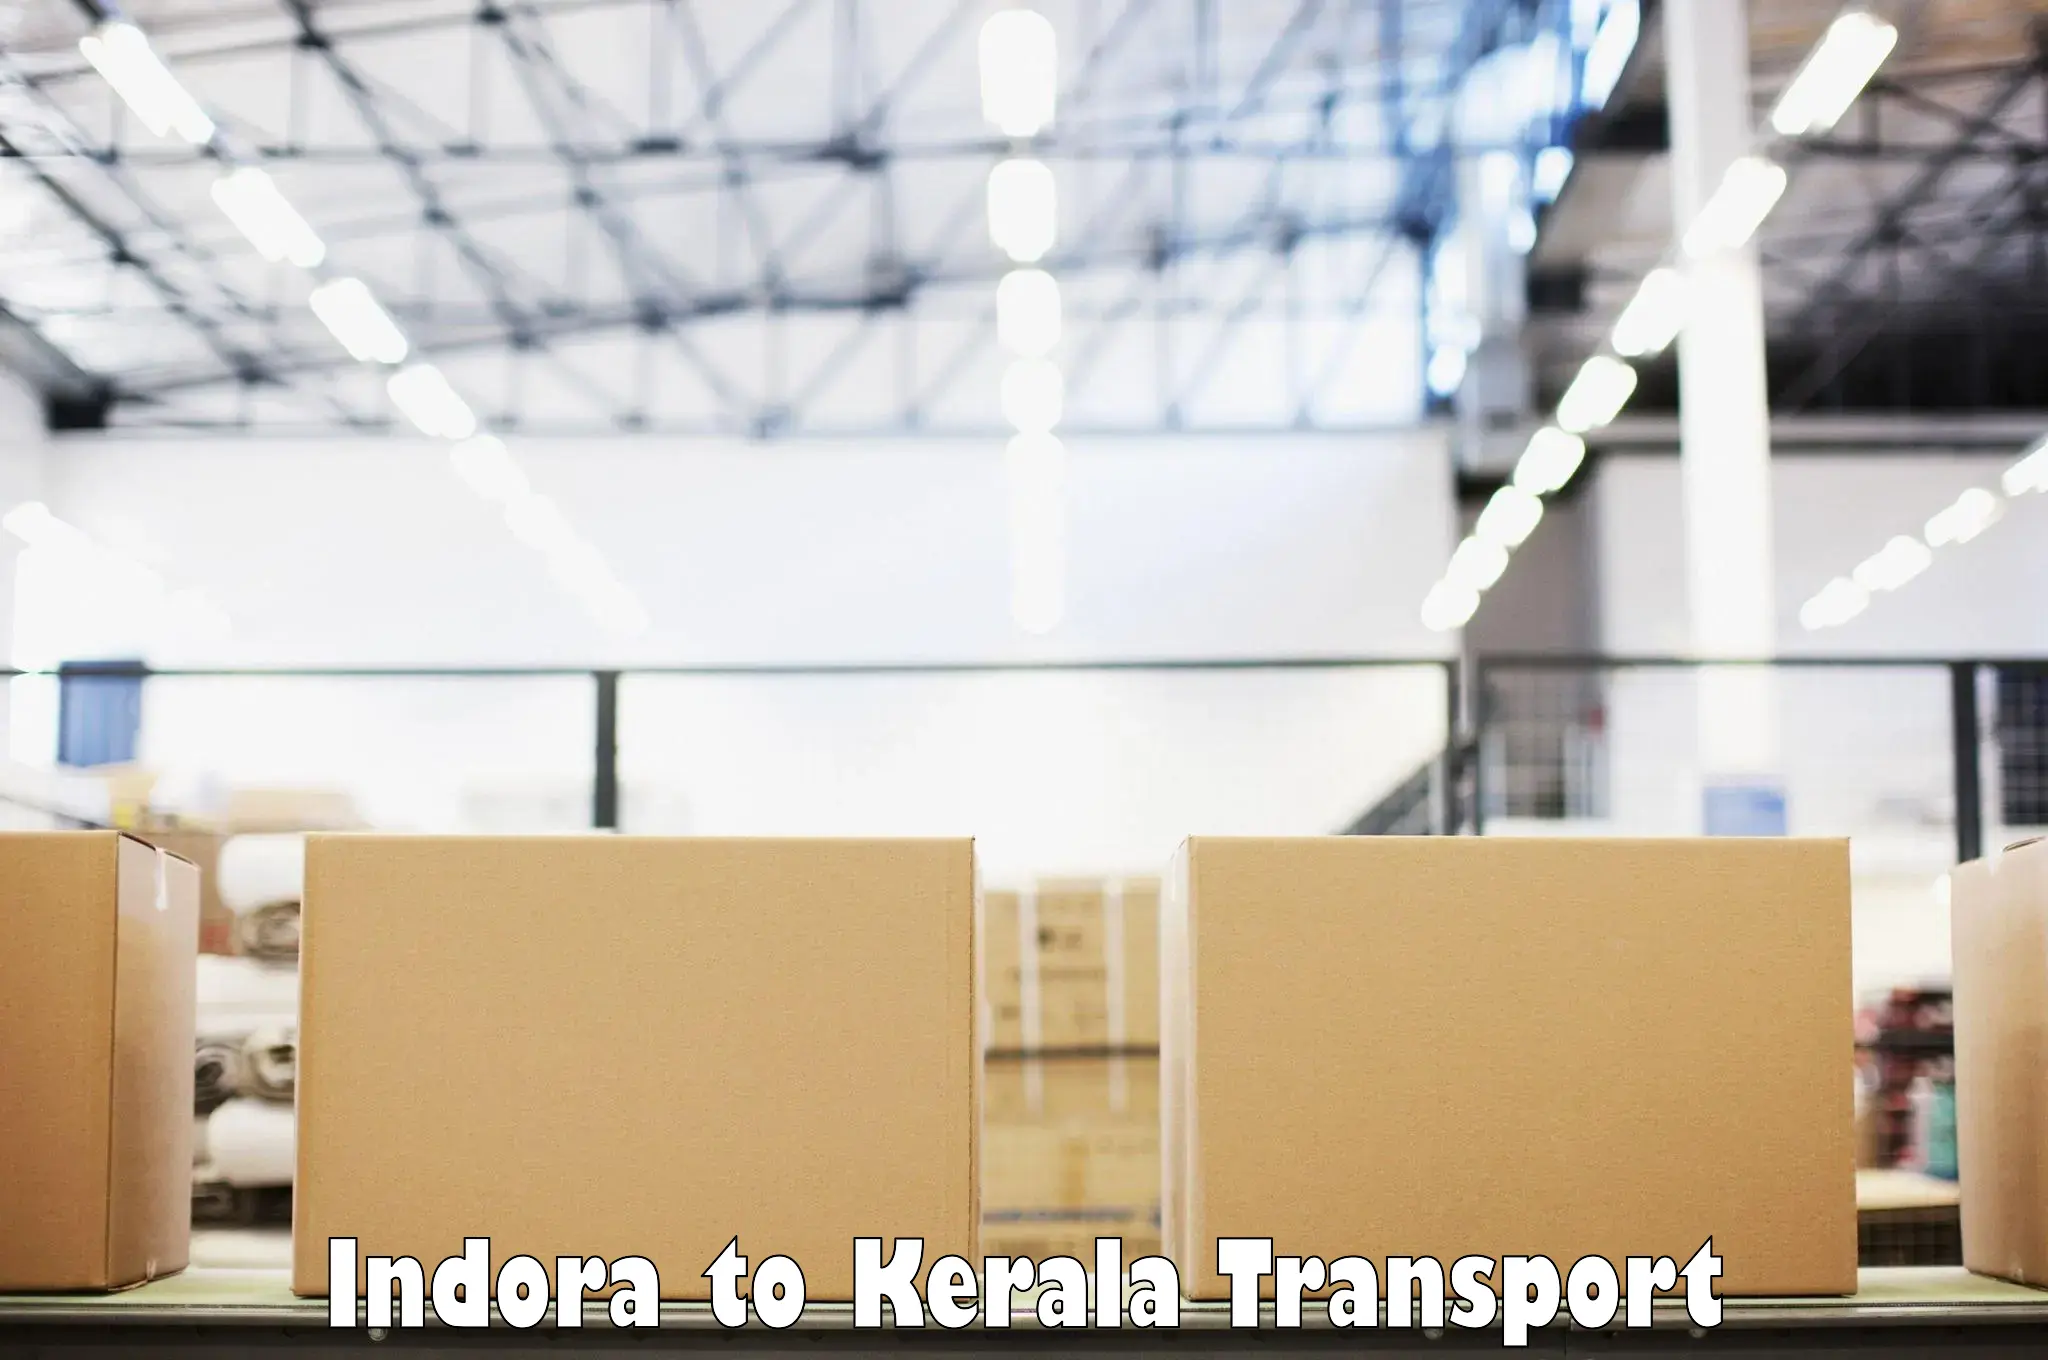 Transport in sharing Indora to Kottayam